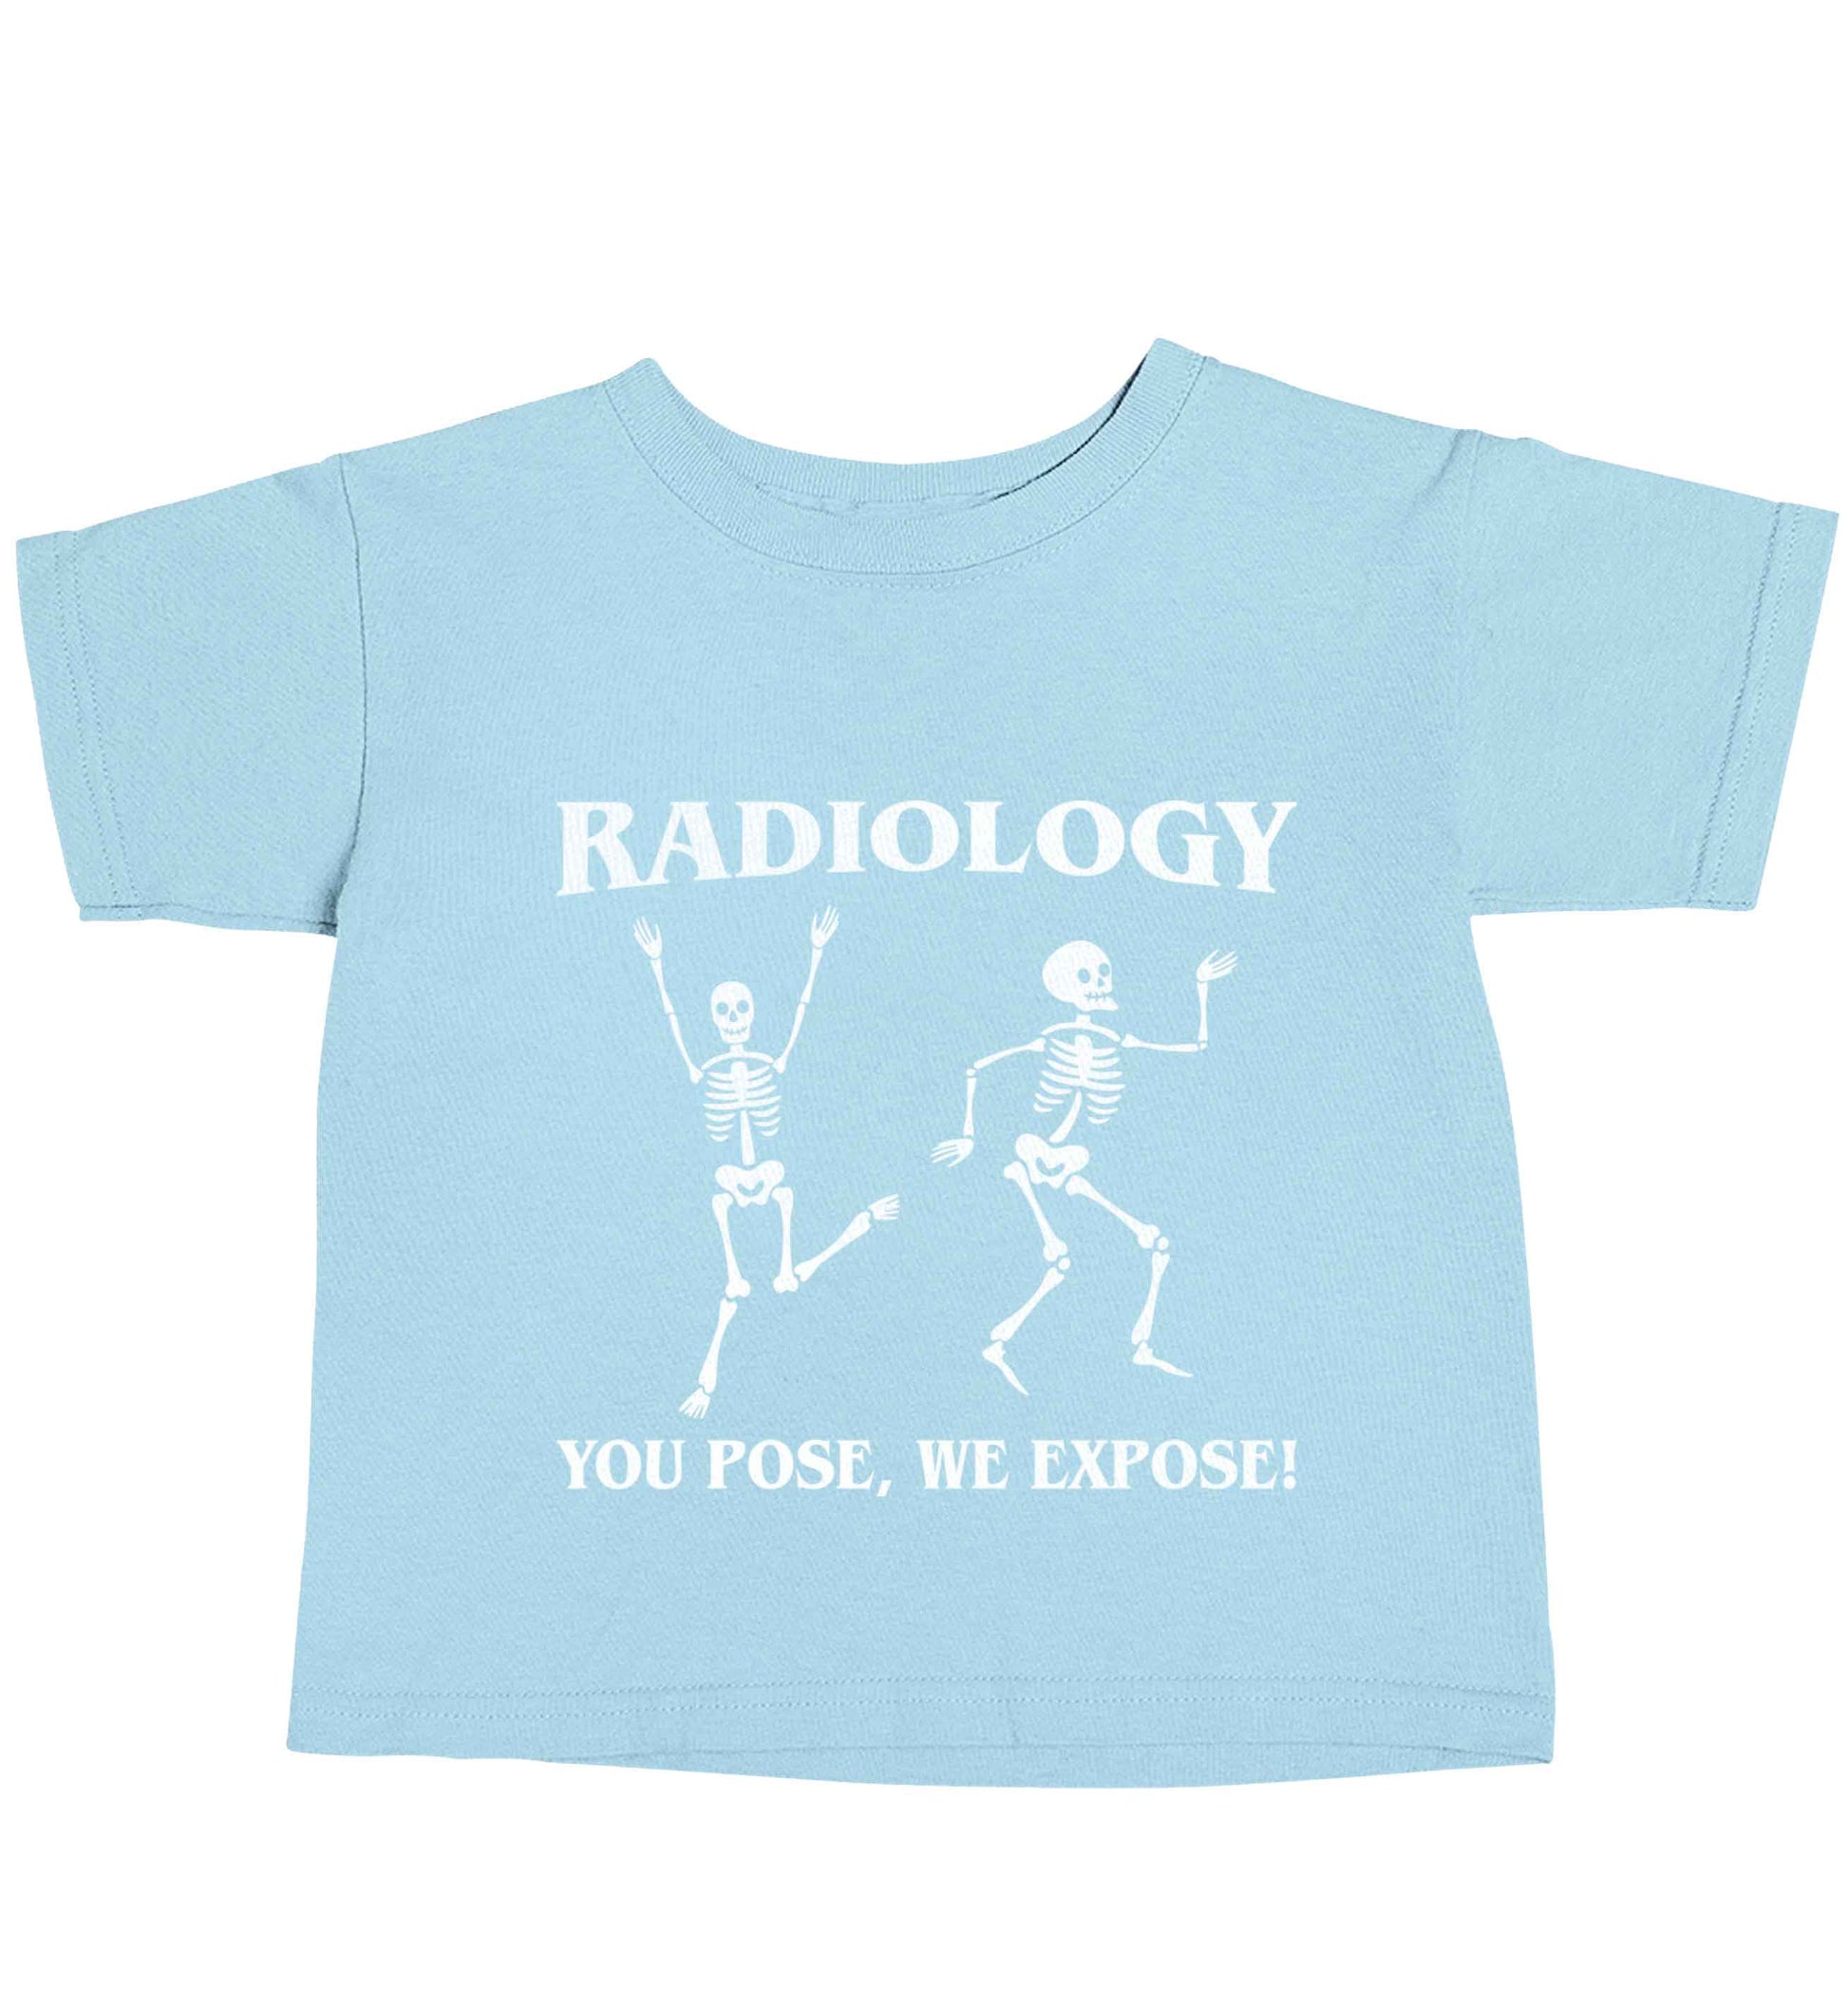 Radiology you pose we expose light blue baby toddler Tshirt 2 Years